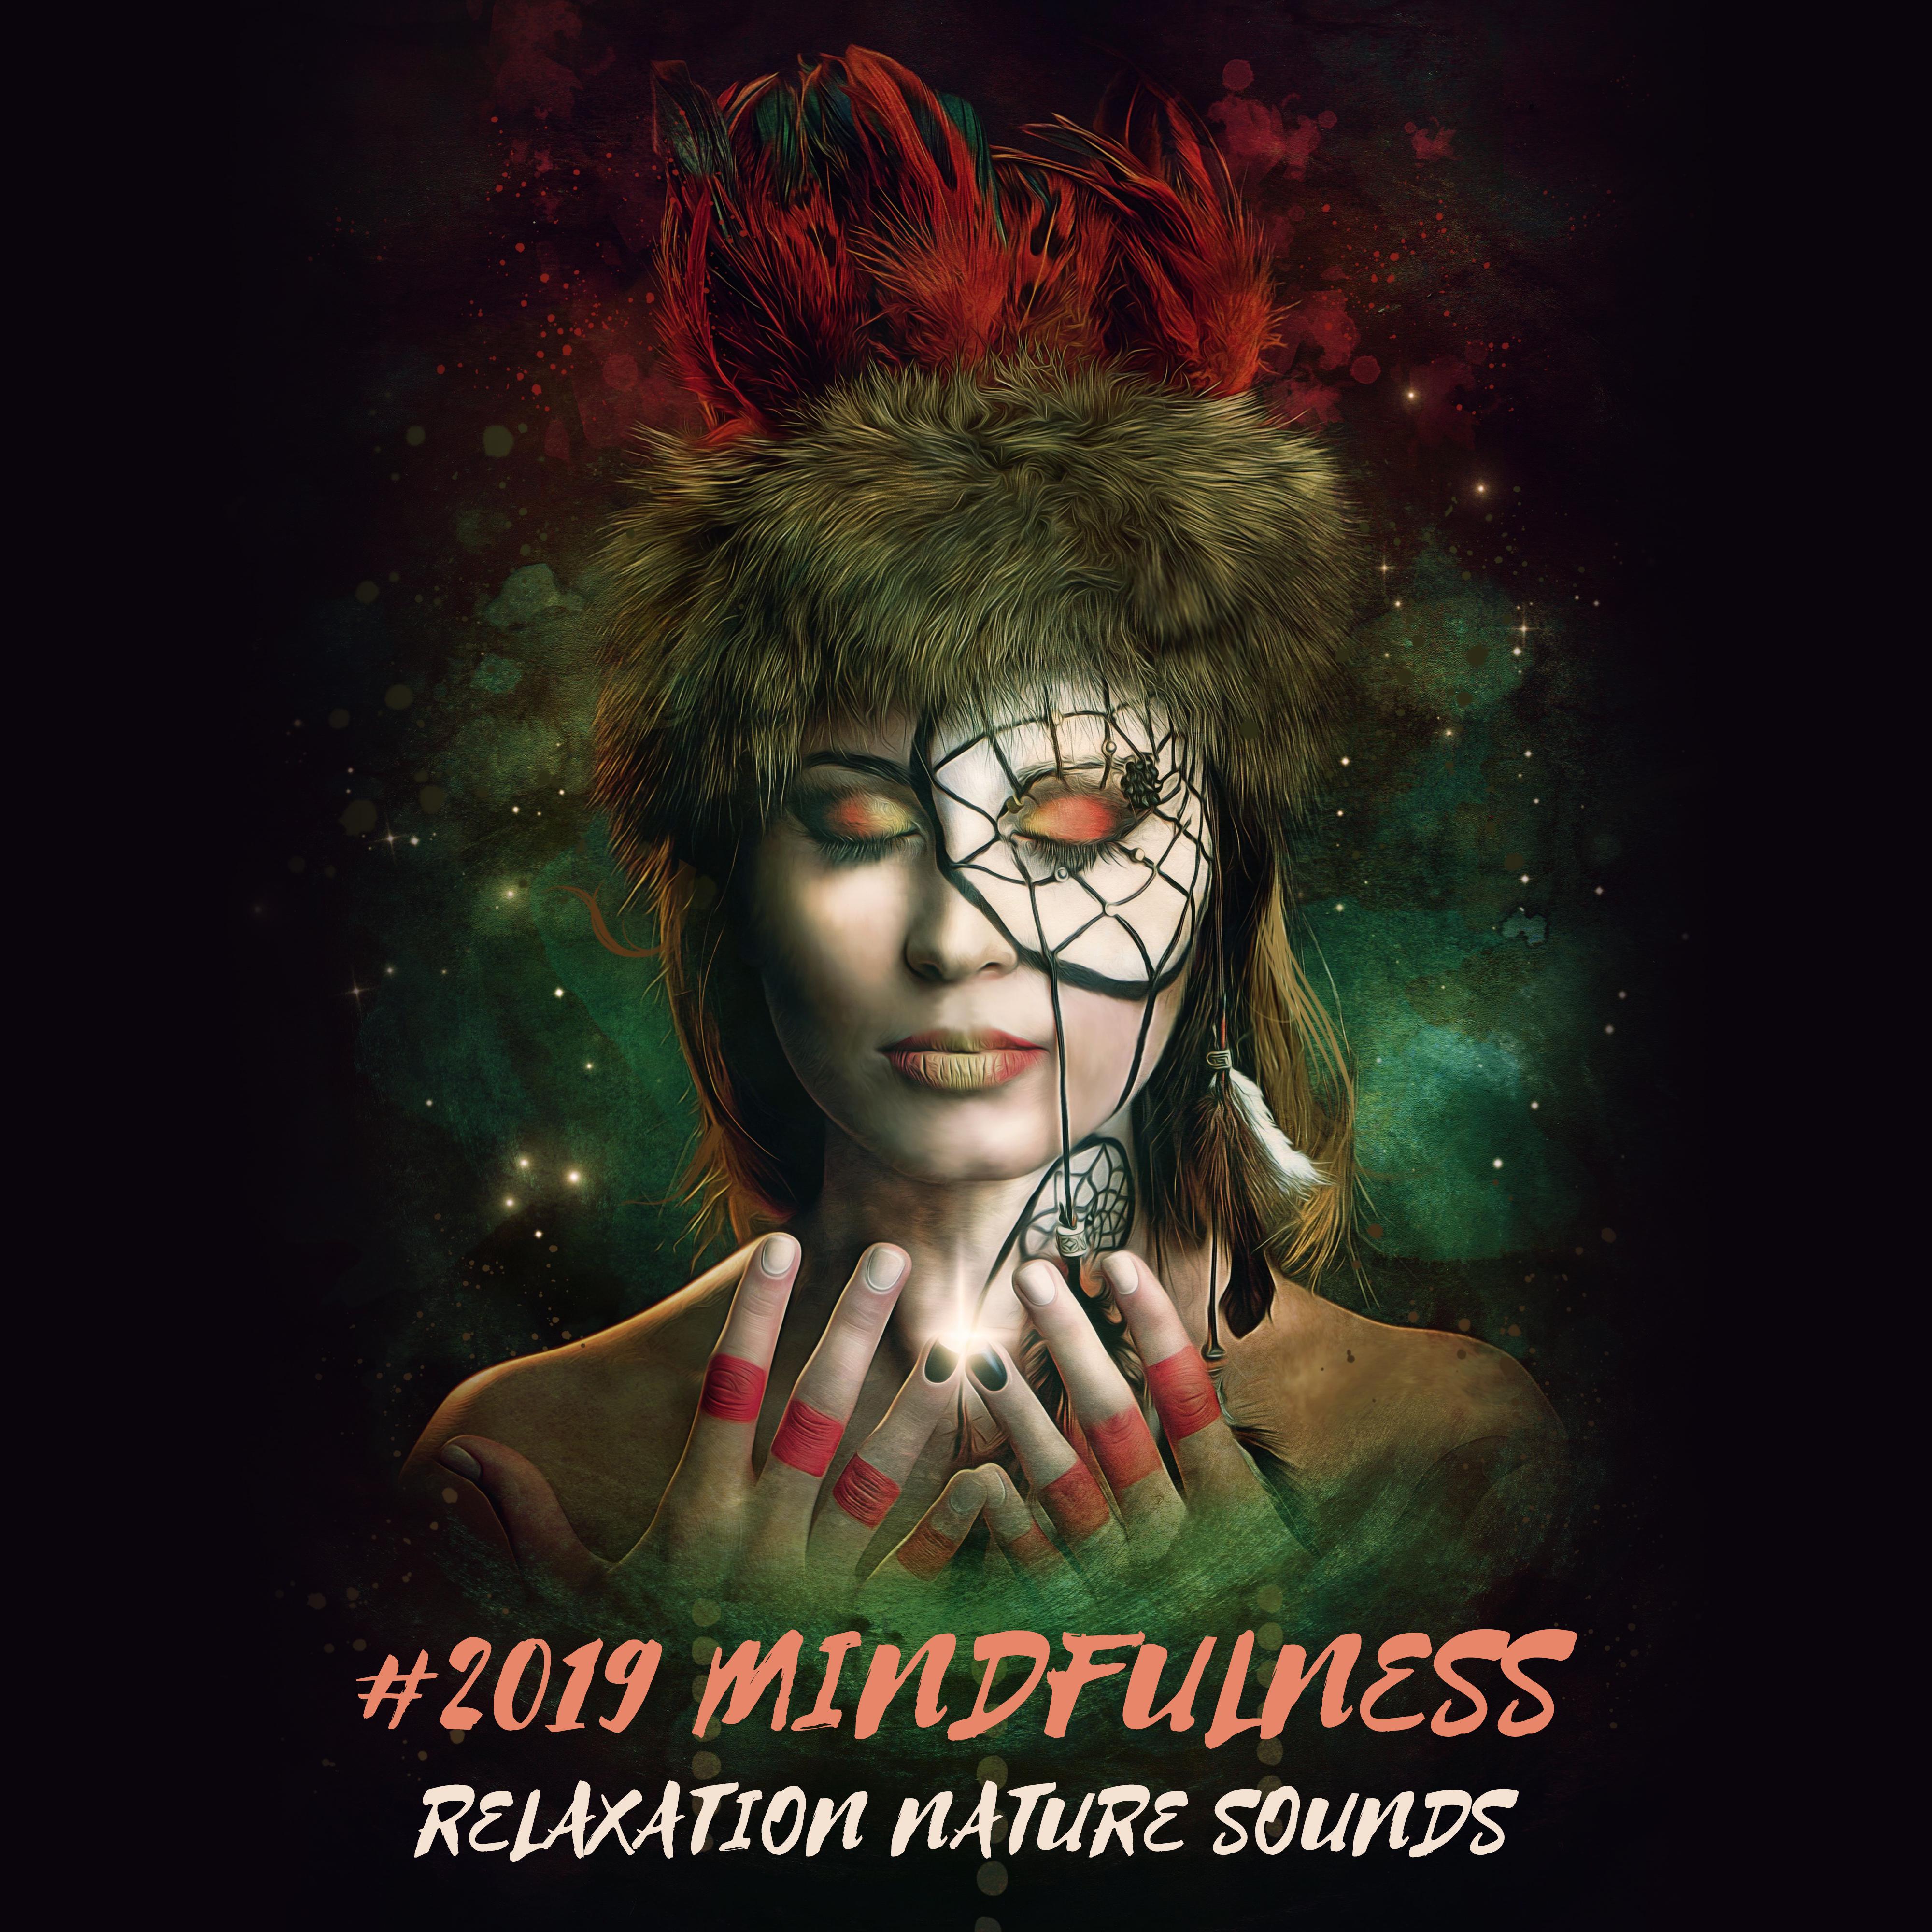 #2019 Mindfulness Relaxation Nature Sounds – 15 Relaxing Songs for Deep Meditation, Yoga Training, Inner Balance, Spiritual Awakening, Zen